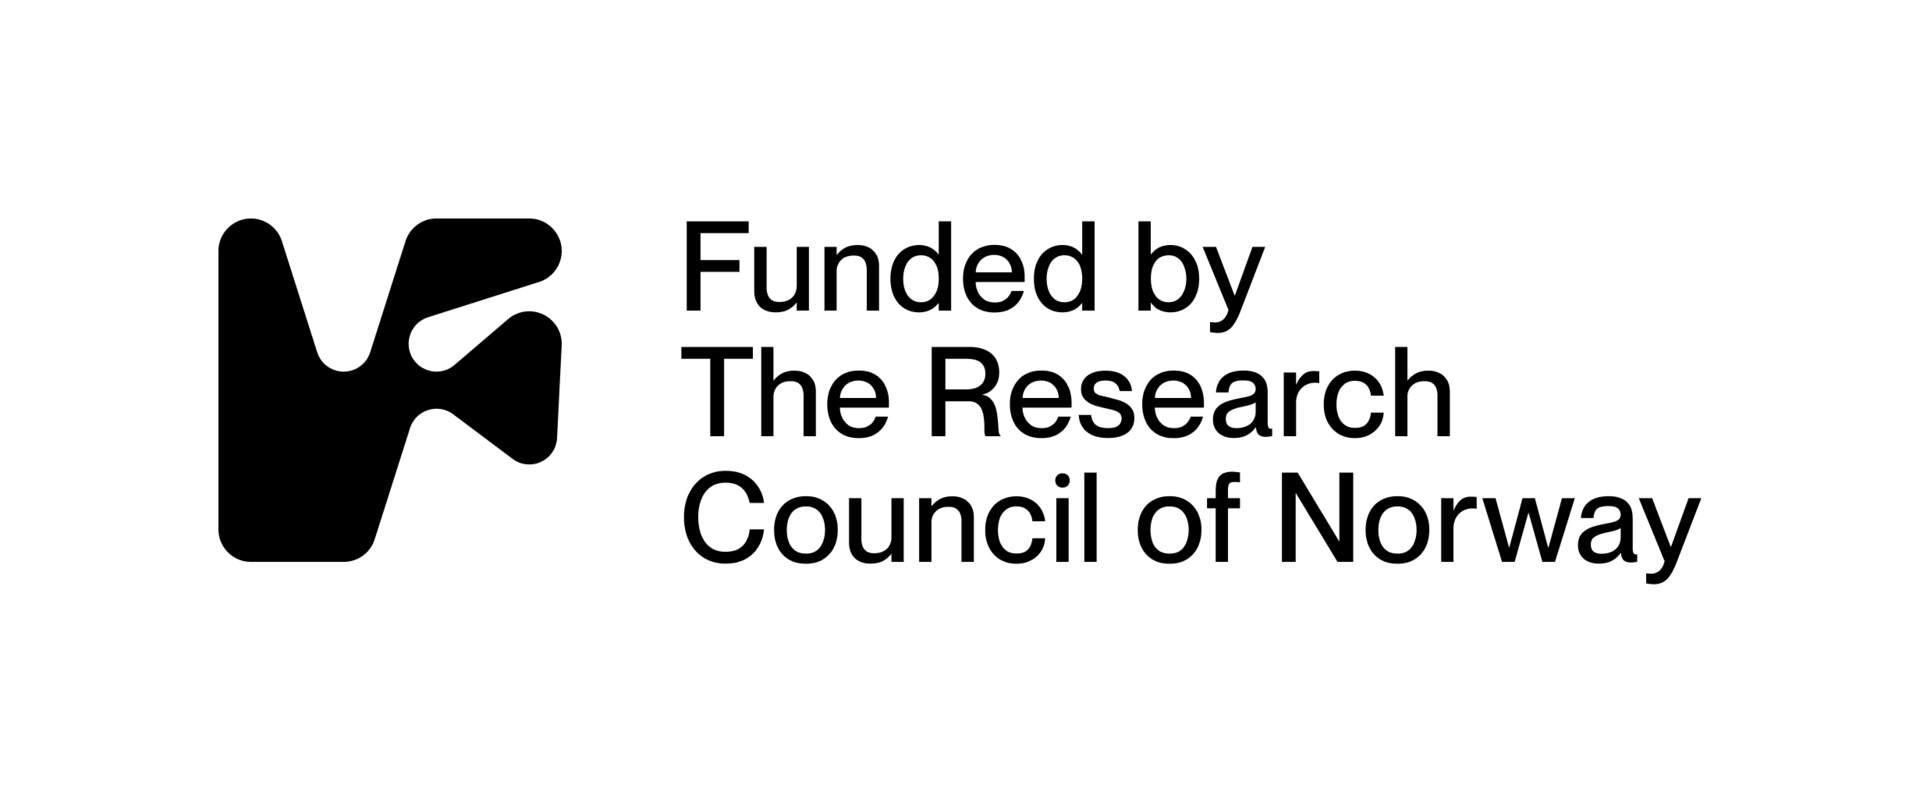 The Norwegian Research Council logo